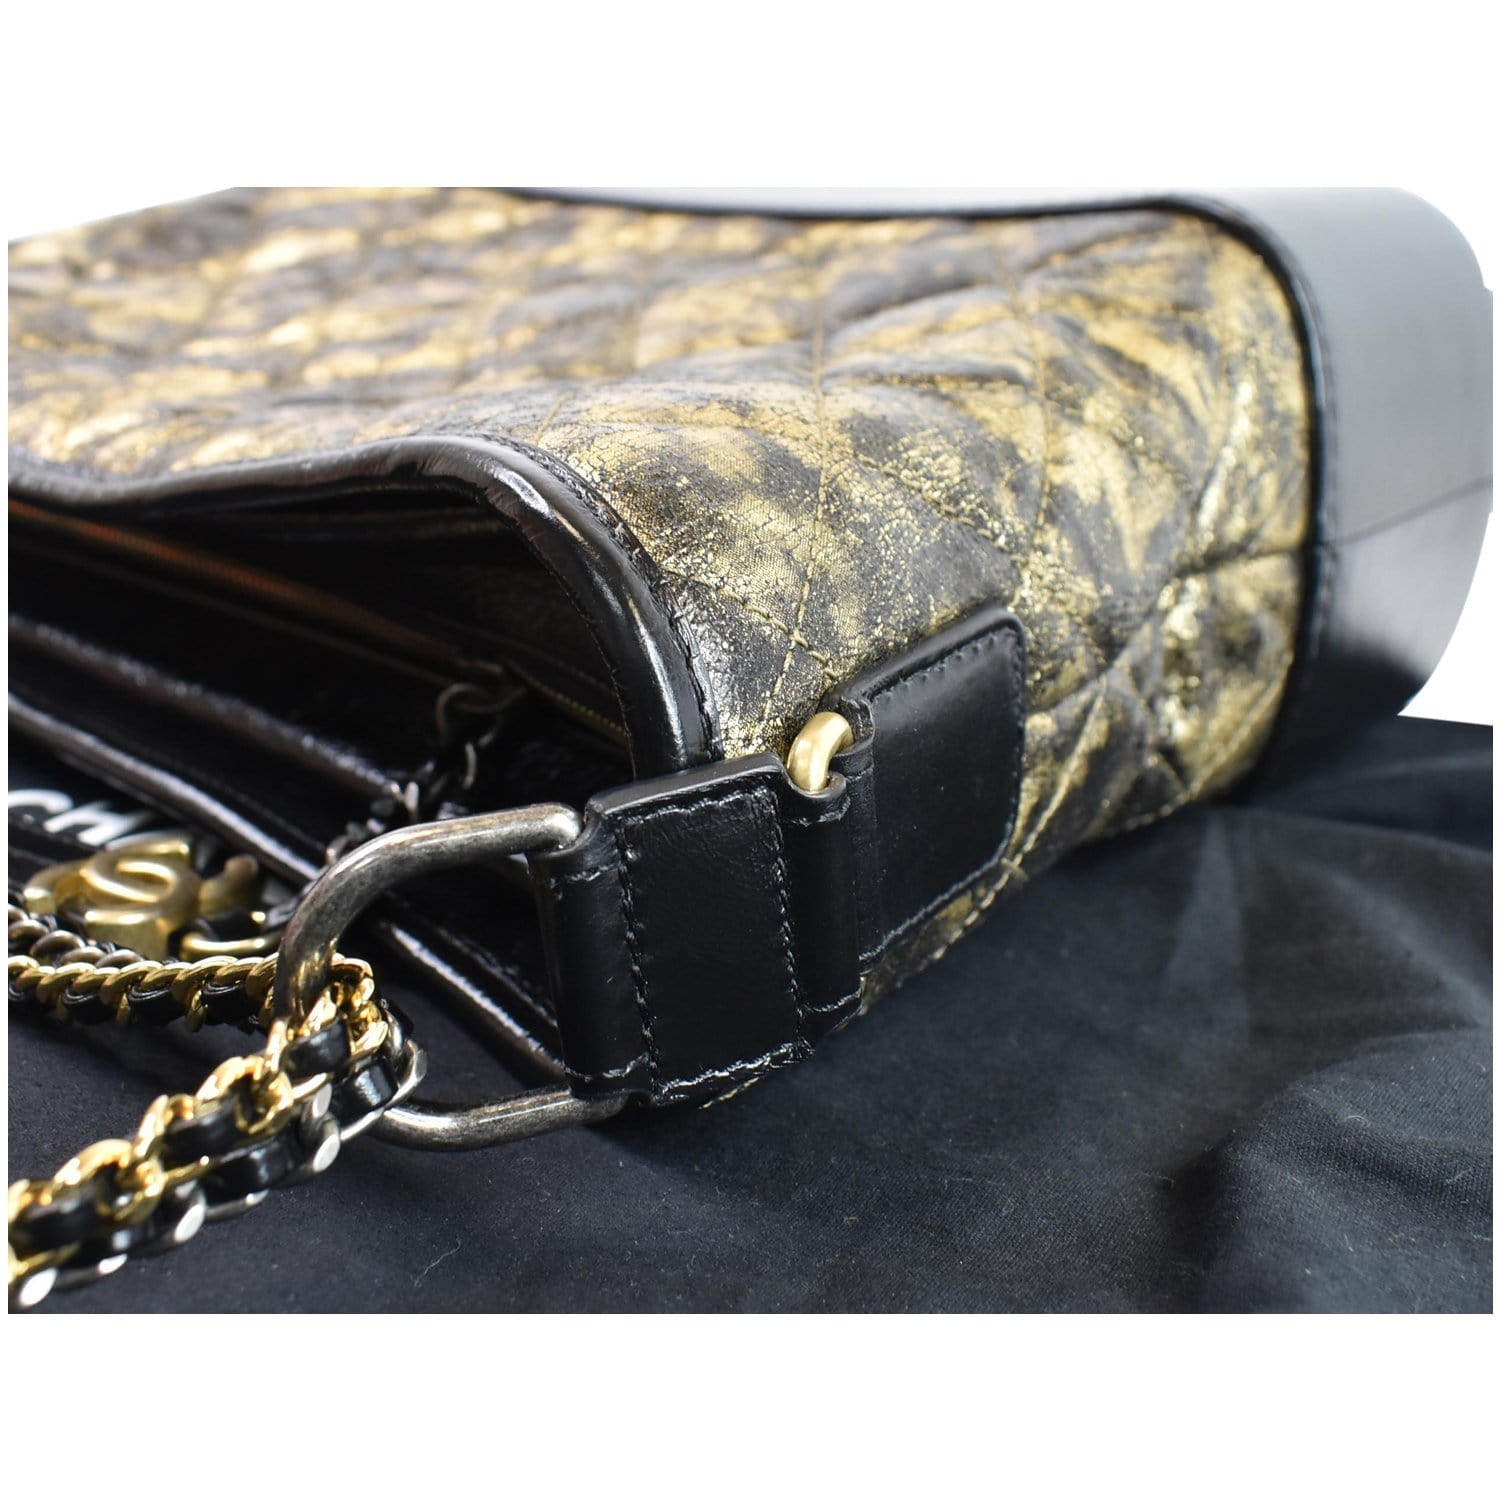 CHANEL Gabrielle Metallic Crumpled Leather Hobo Shoulder Bag Black/Gol